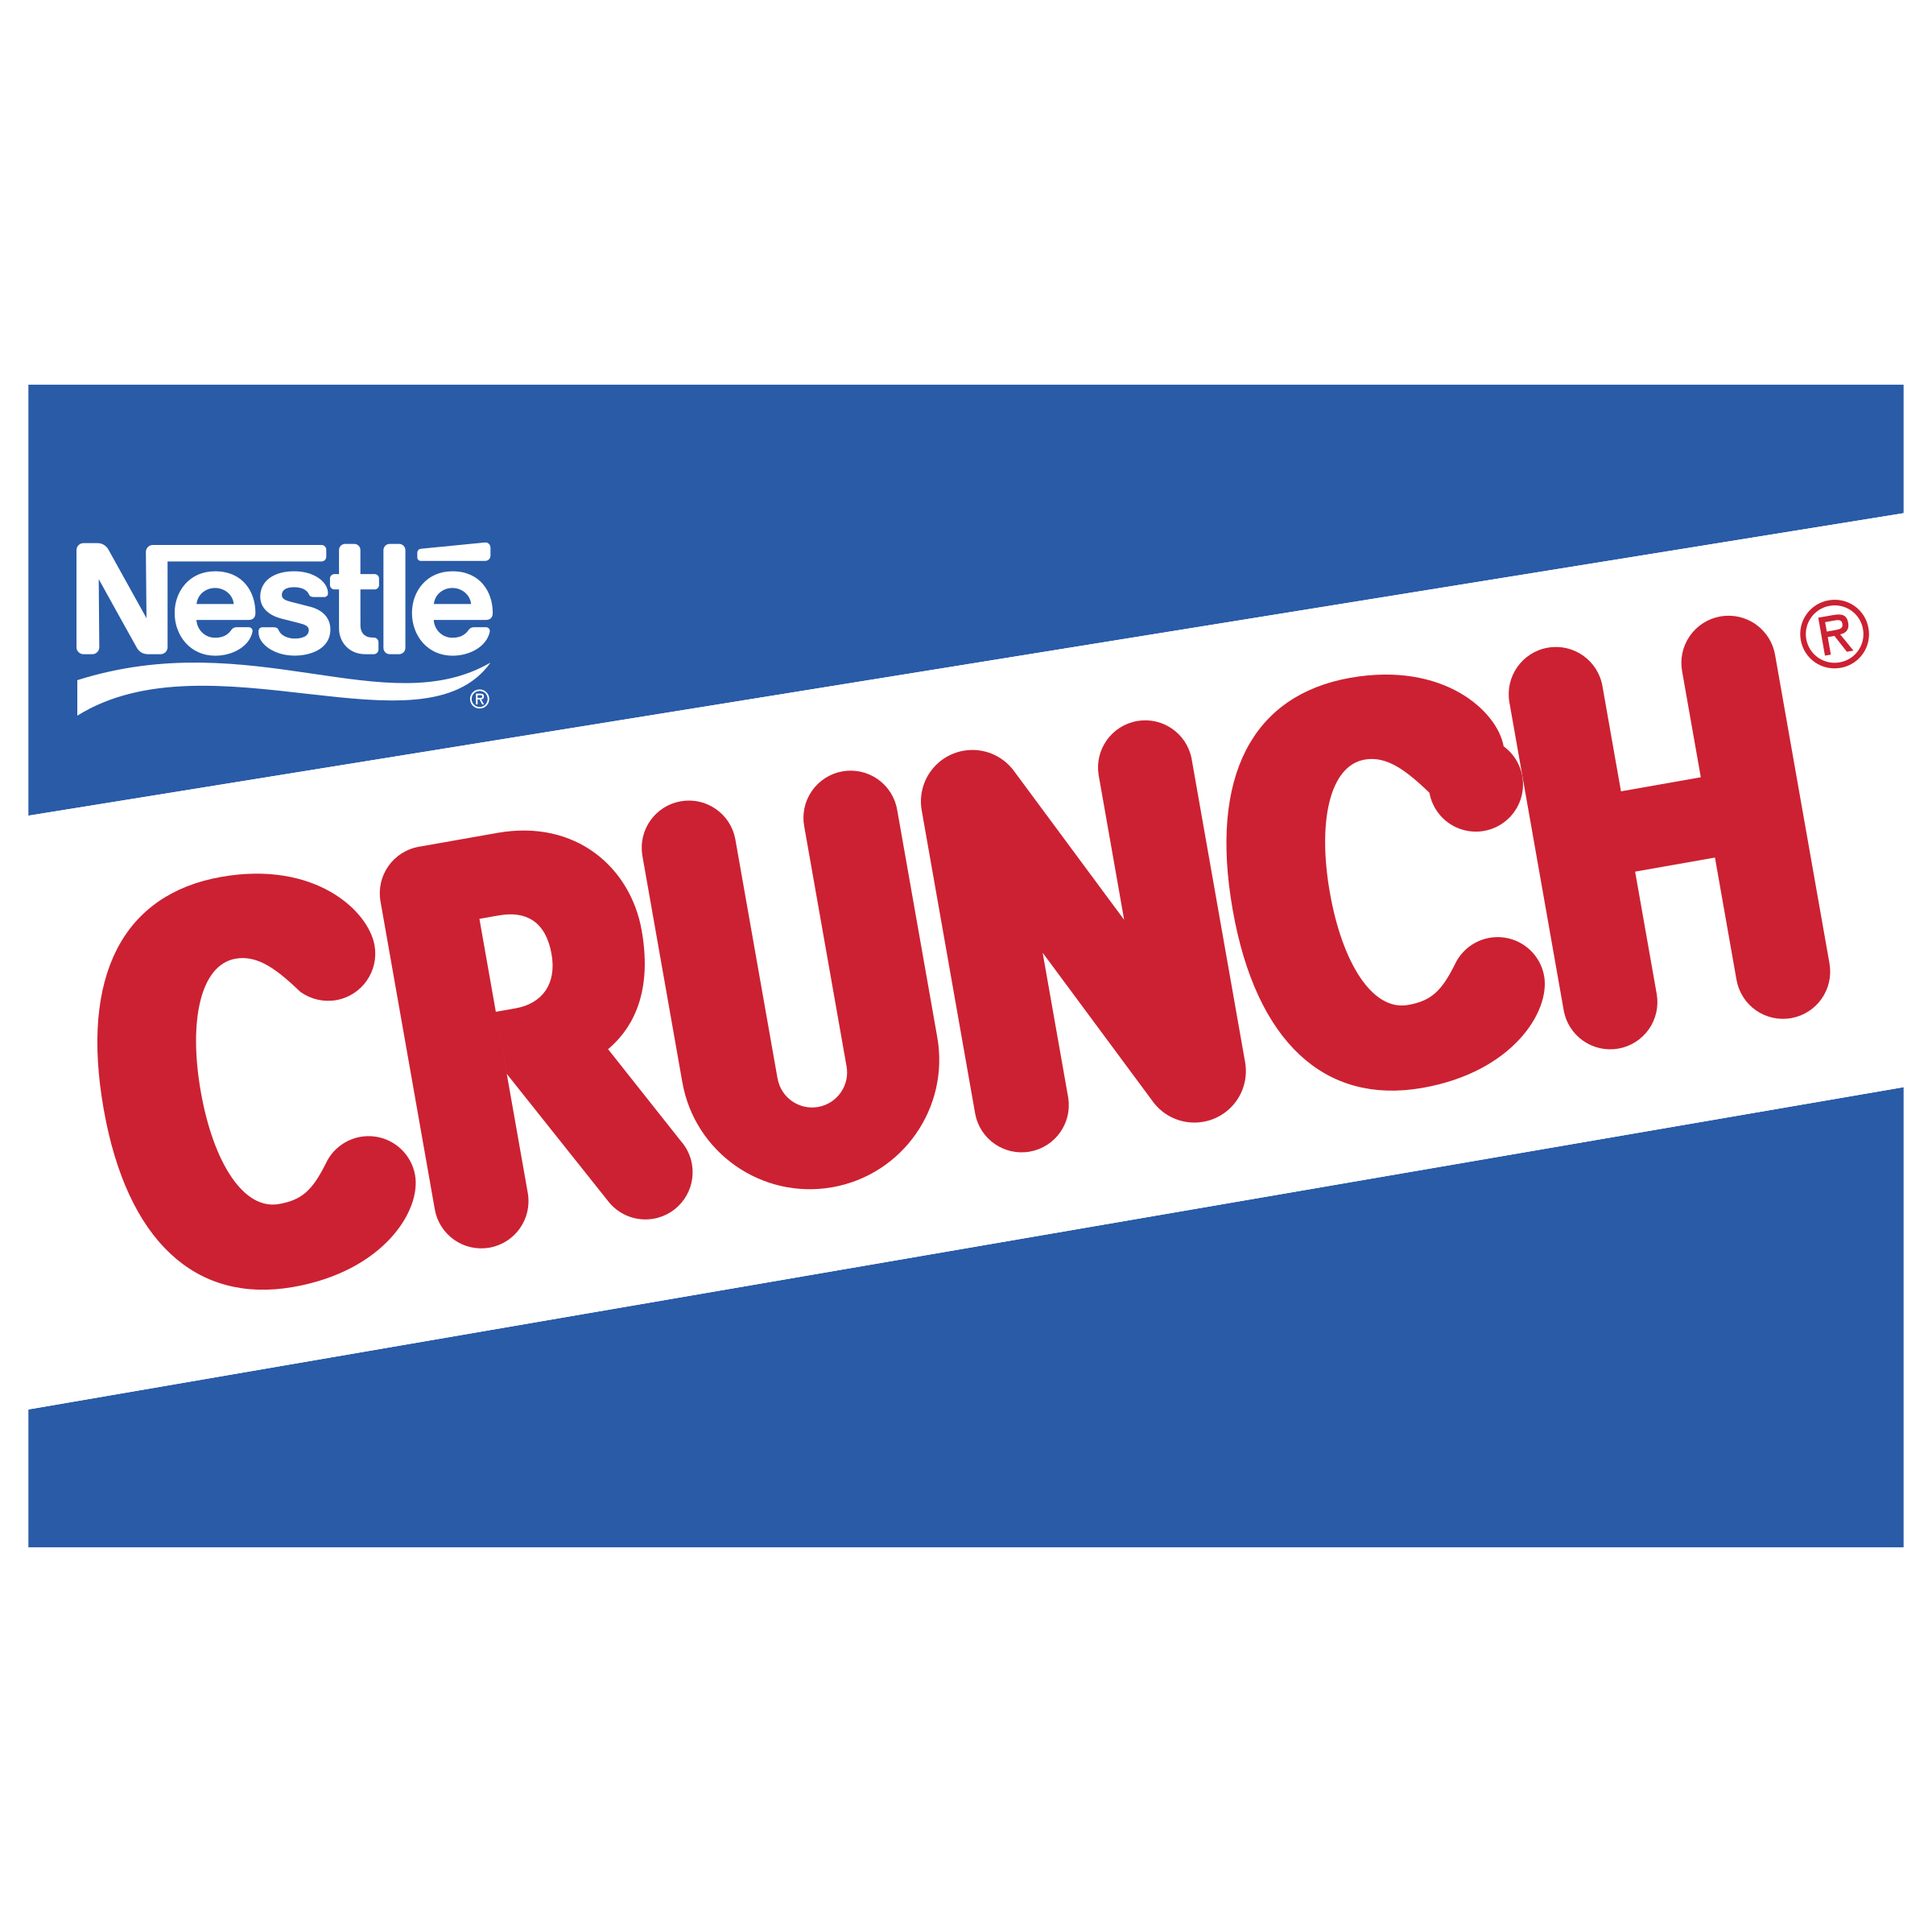 Crunch Logo - Crunch Logo PNG Transparent & SVG Vector - Freebie Supply